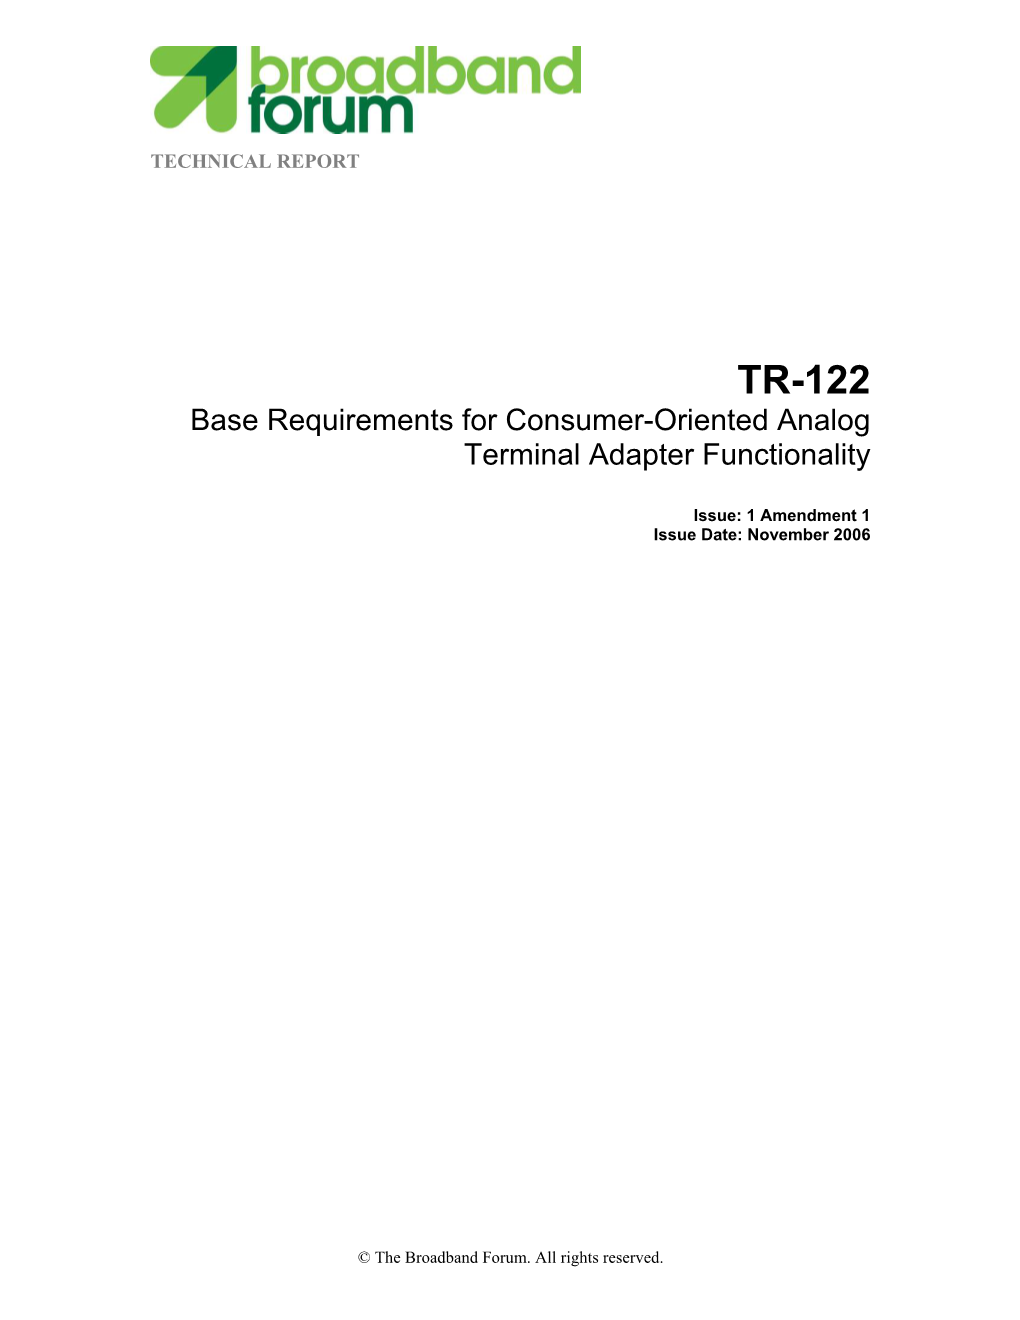 TR-122 Amendment 1 Terminal Adapter Functionality